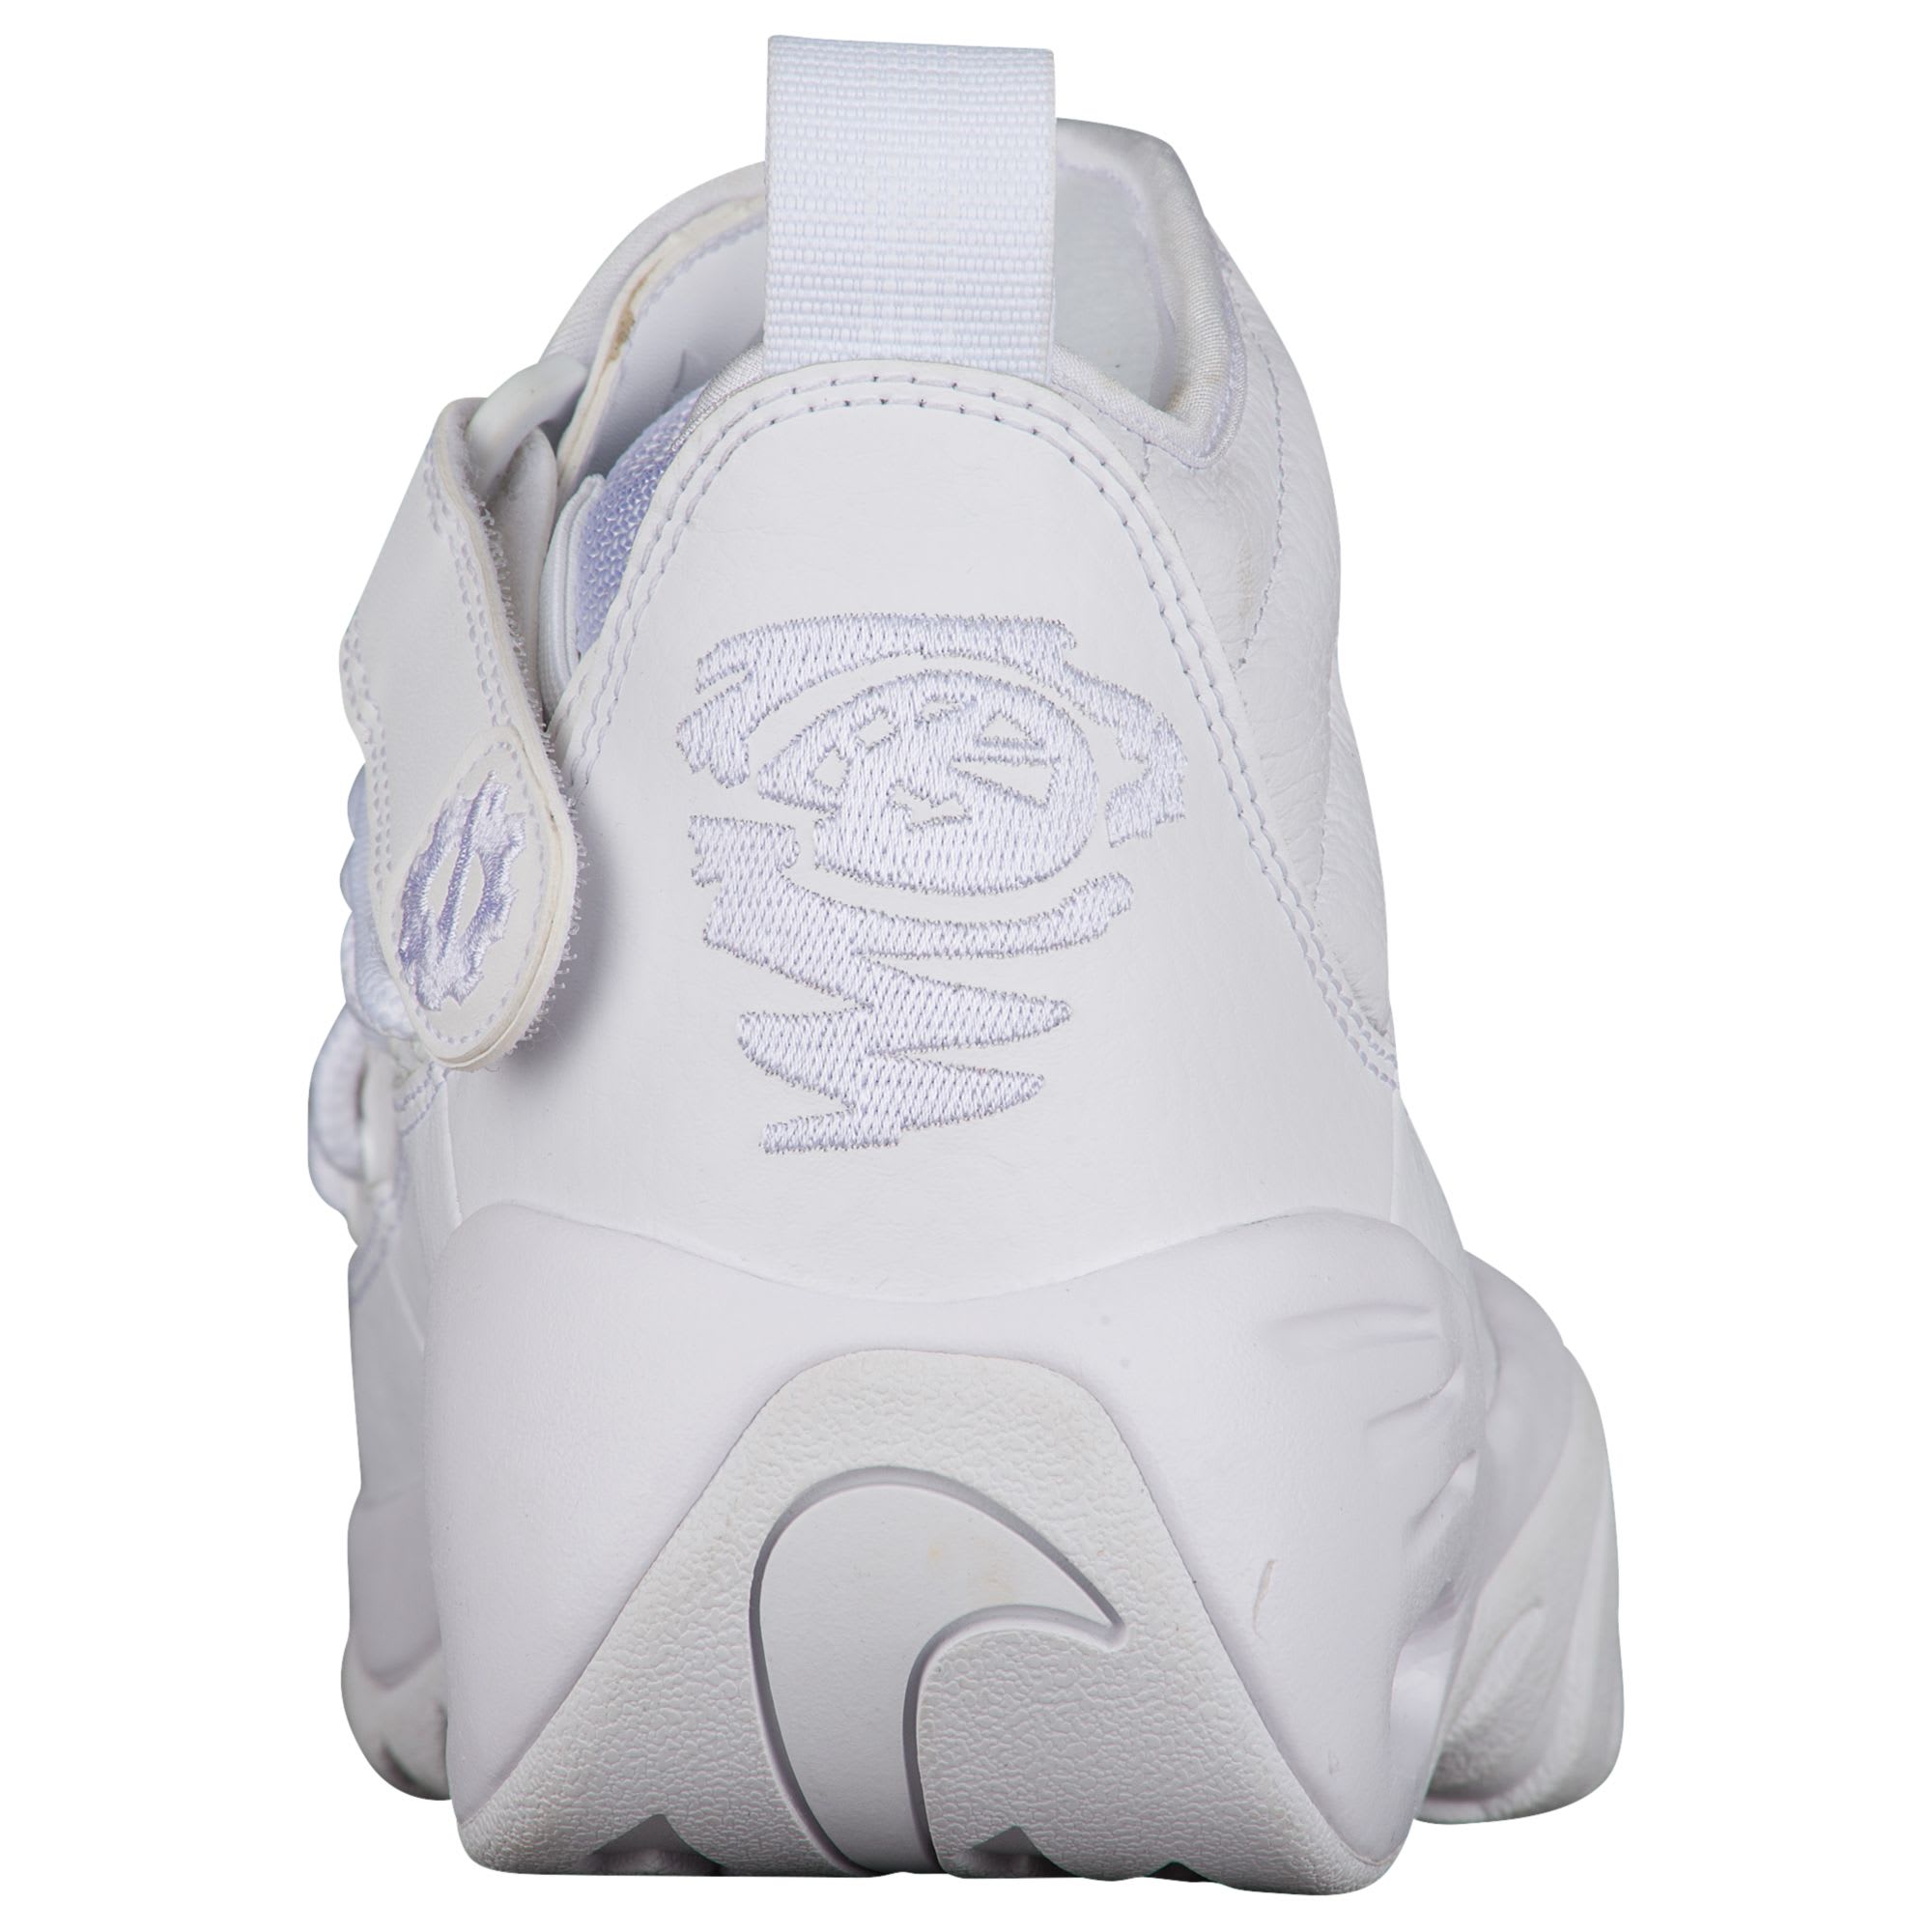 Nike Air Shake Ndestrukt All-White Release Date Heel 880869-101